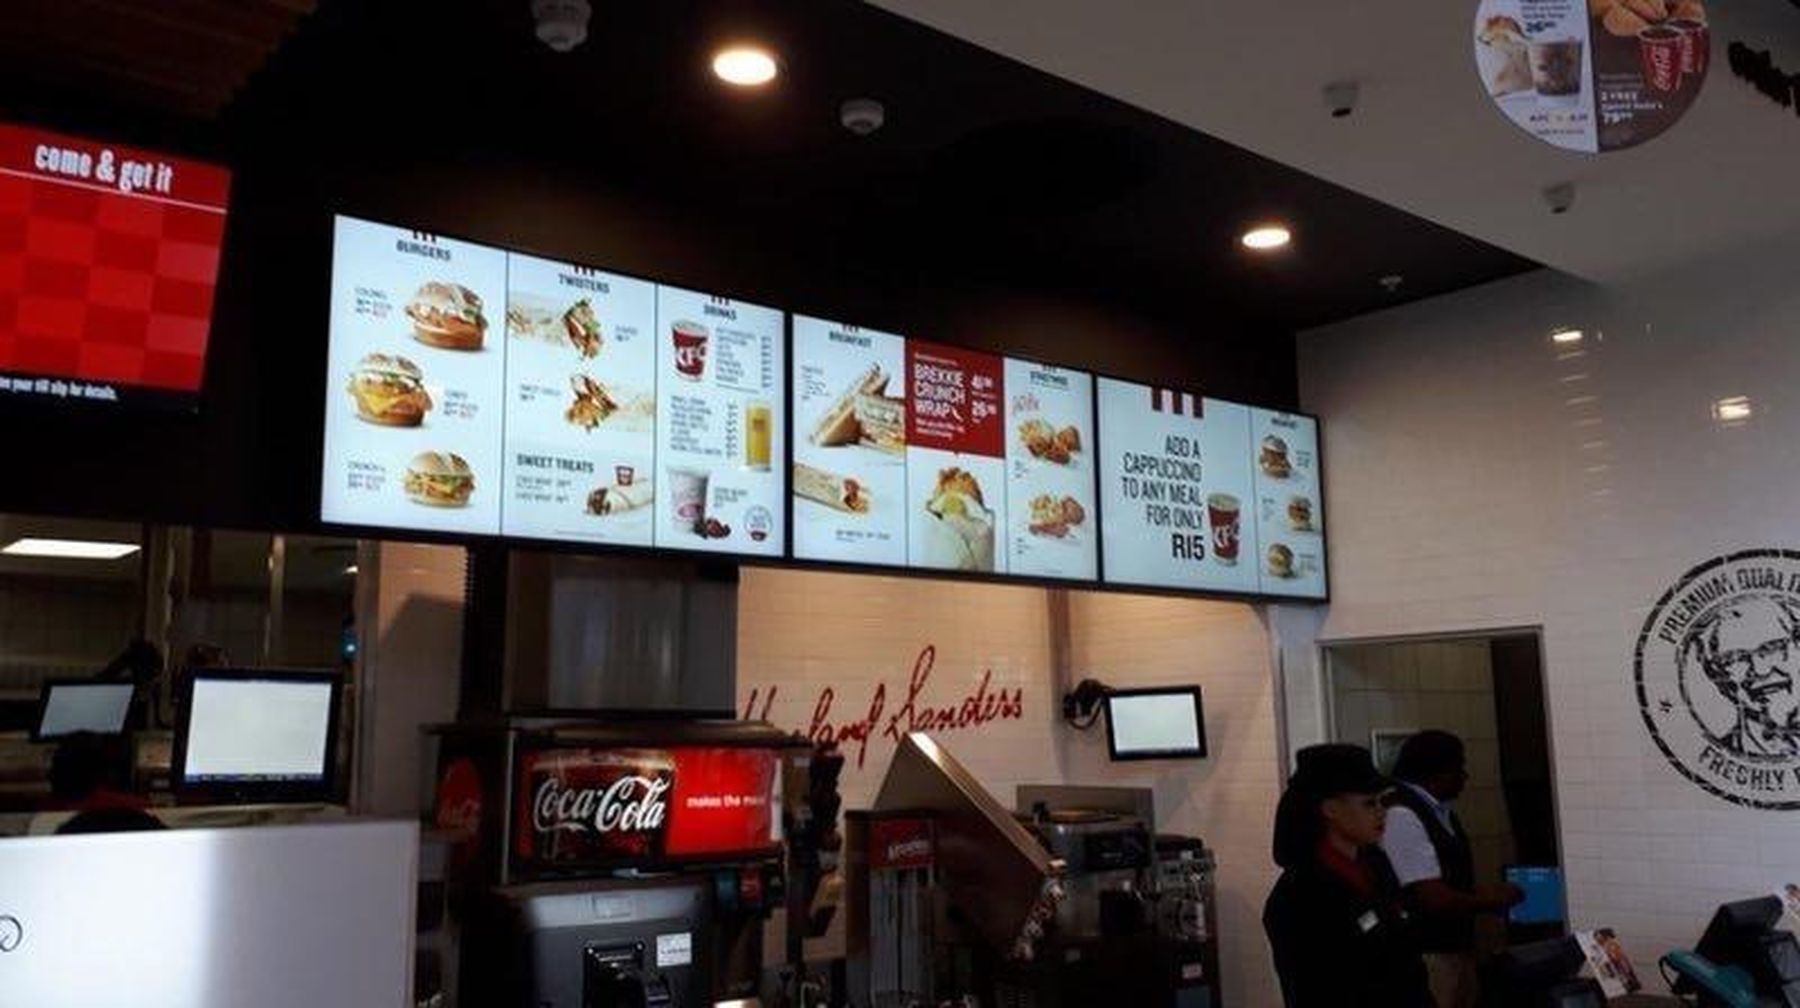 digital menu boards for restaurants